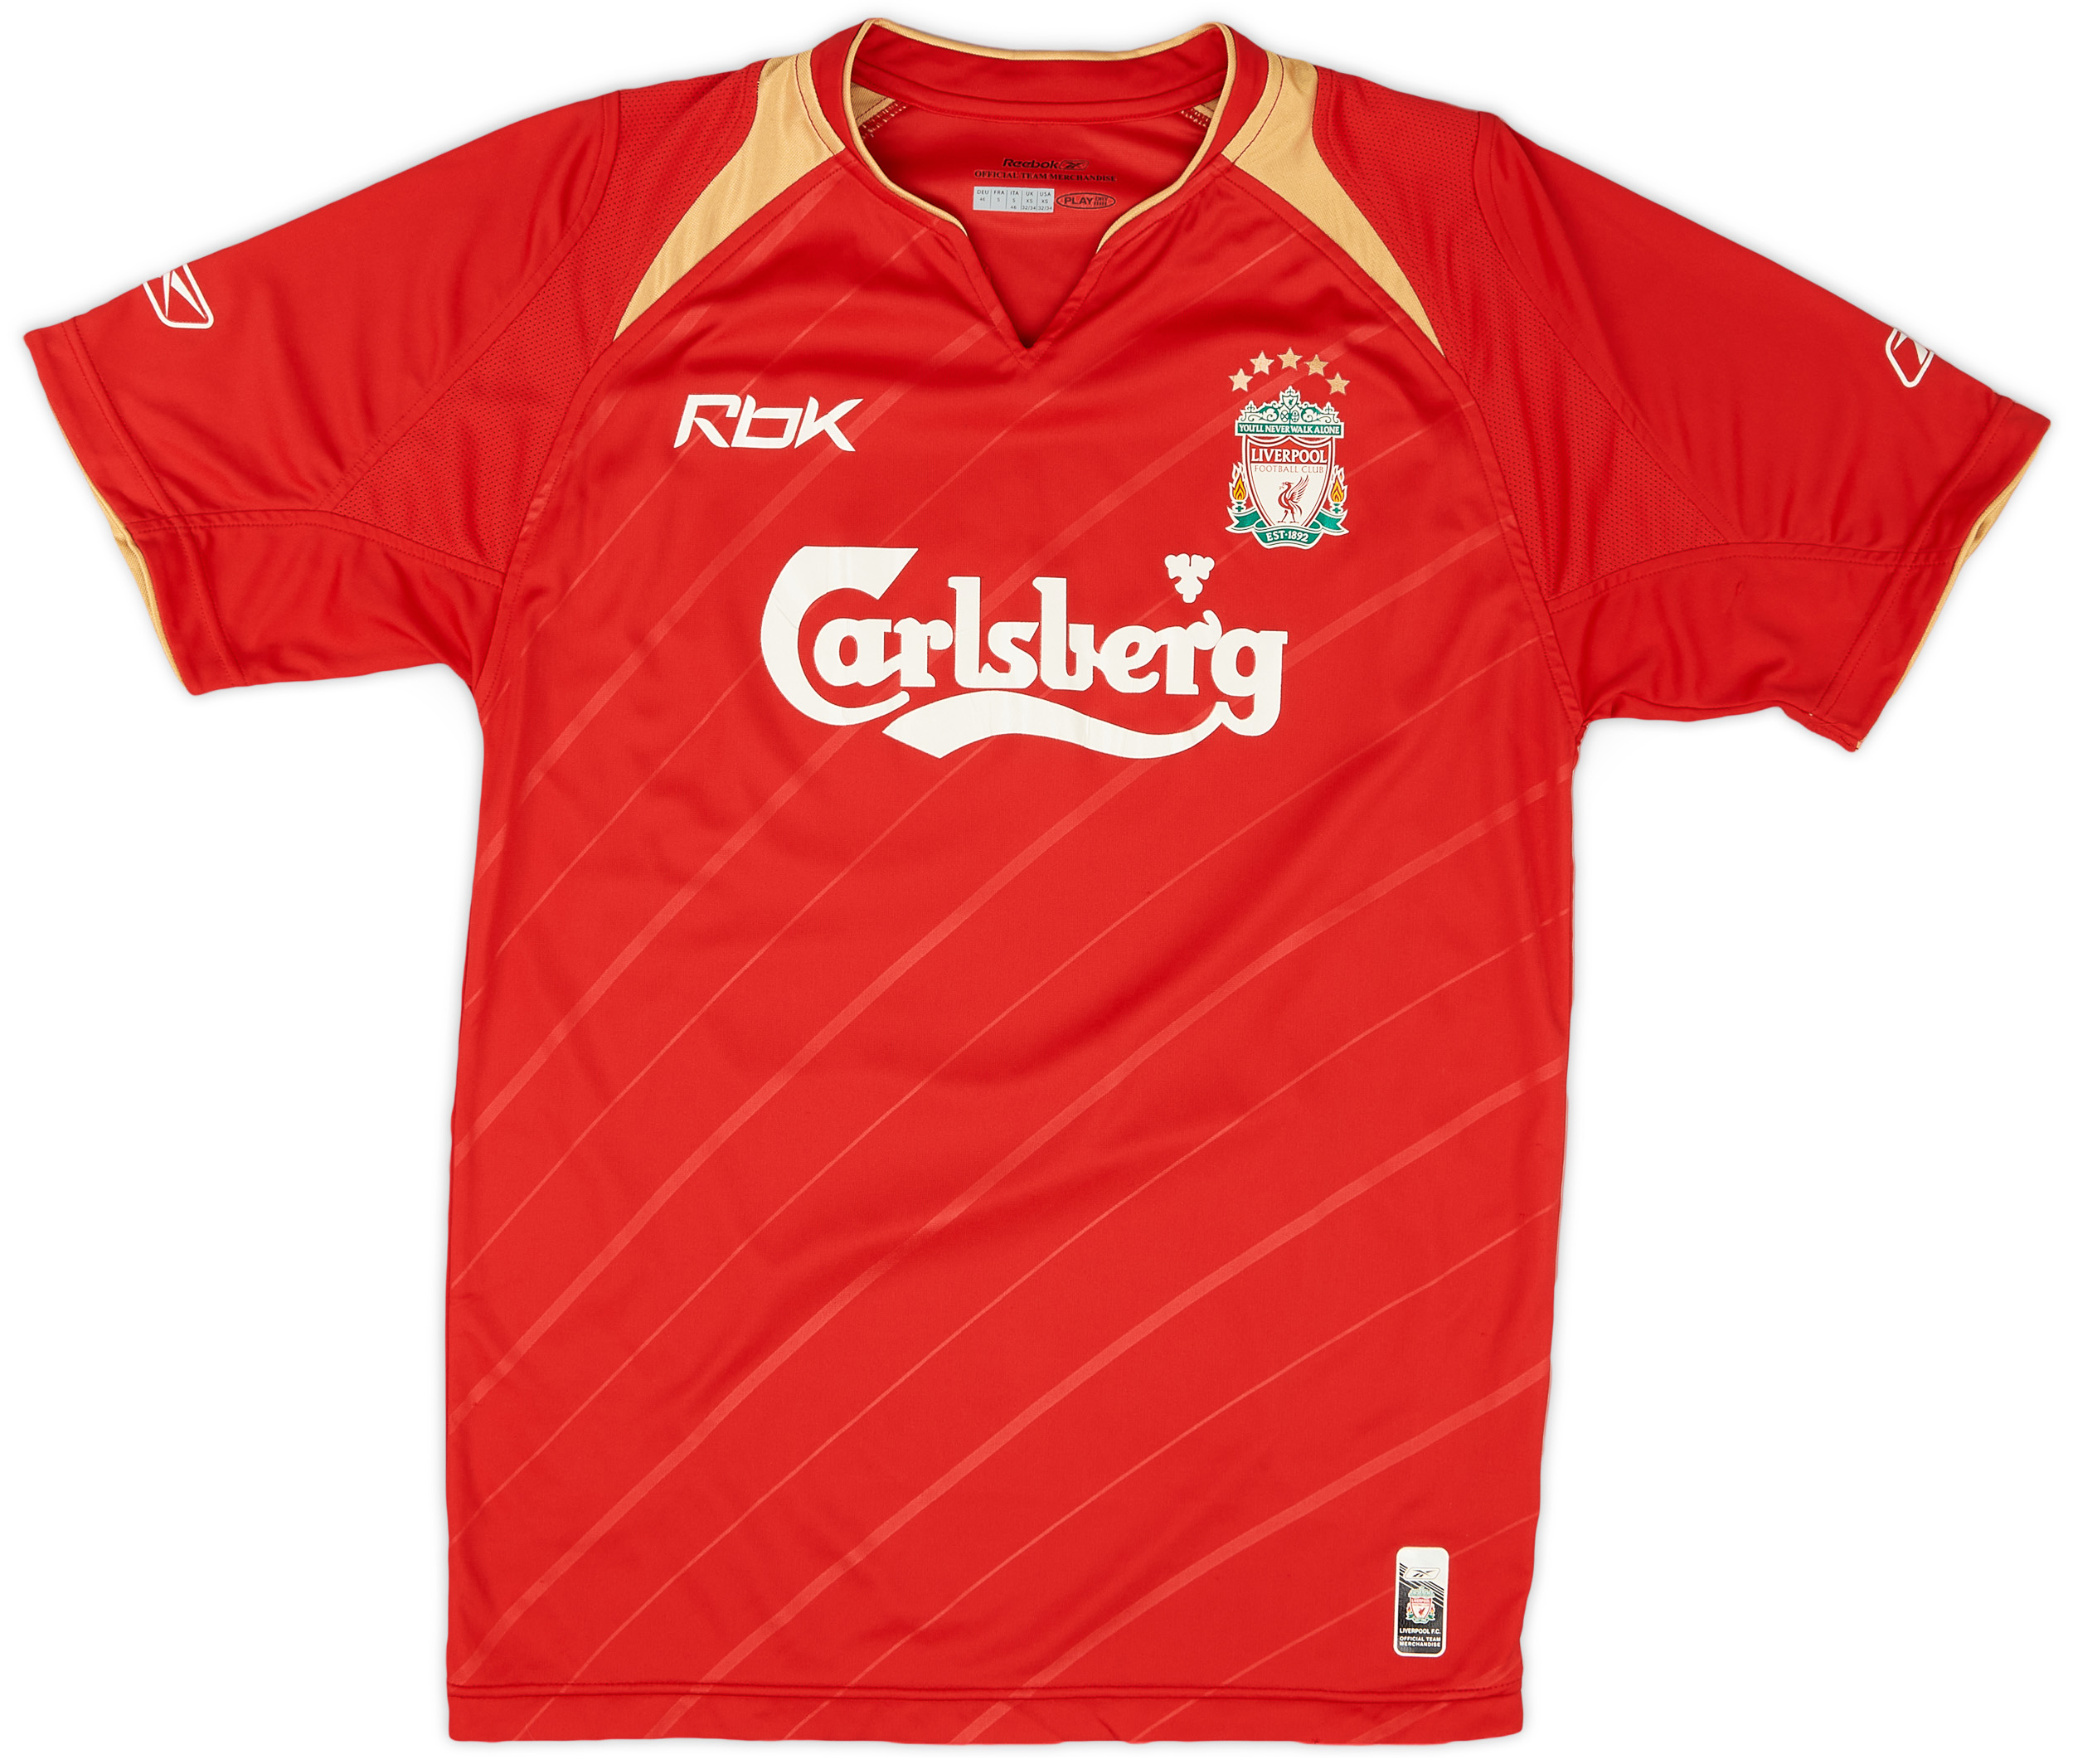 2005-06 Liverpool CL Home Shirt - 9/10 - ()